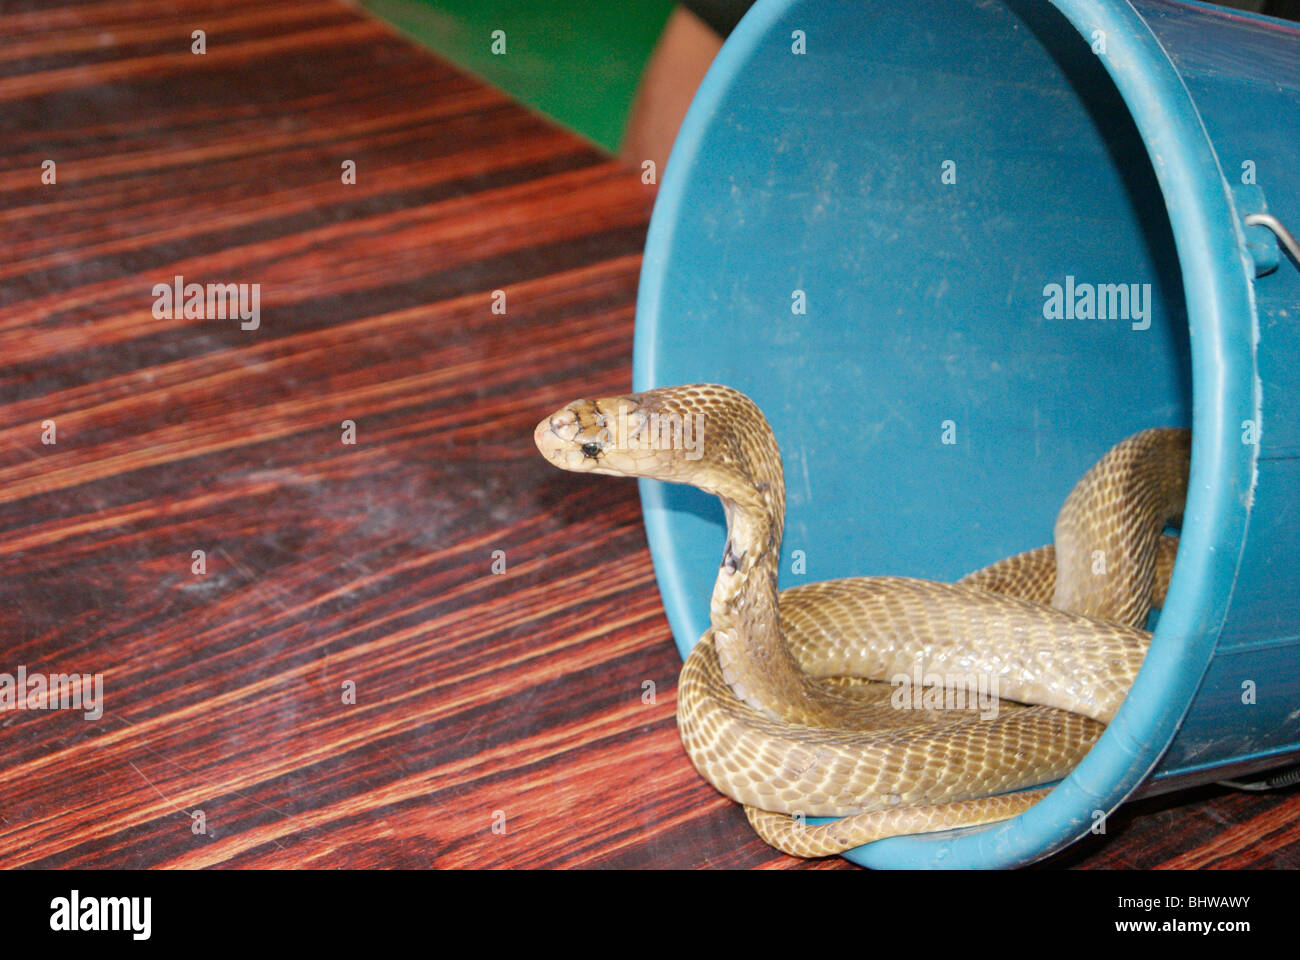 Cobra Dangerous Snake inside a Plastic Bucket.A Scene from Kerala,India Stock Photo